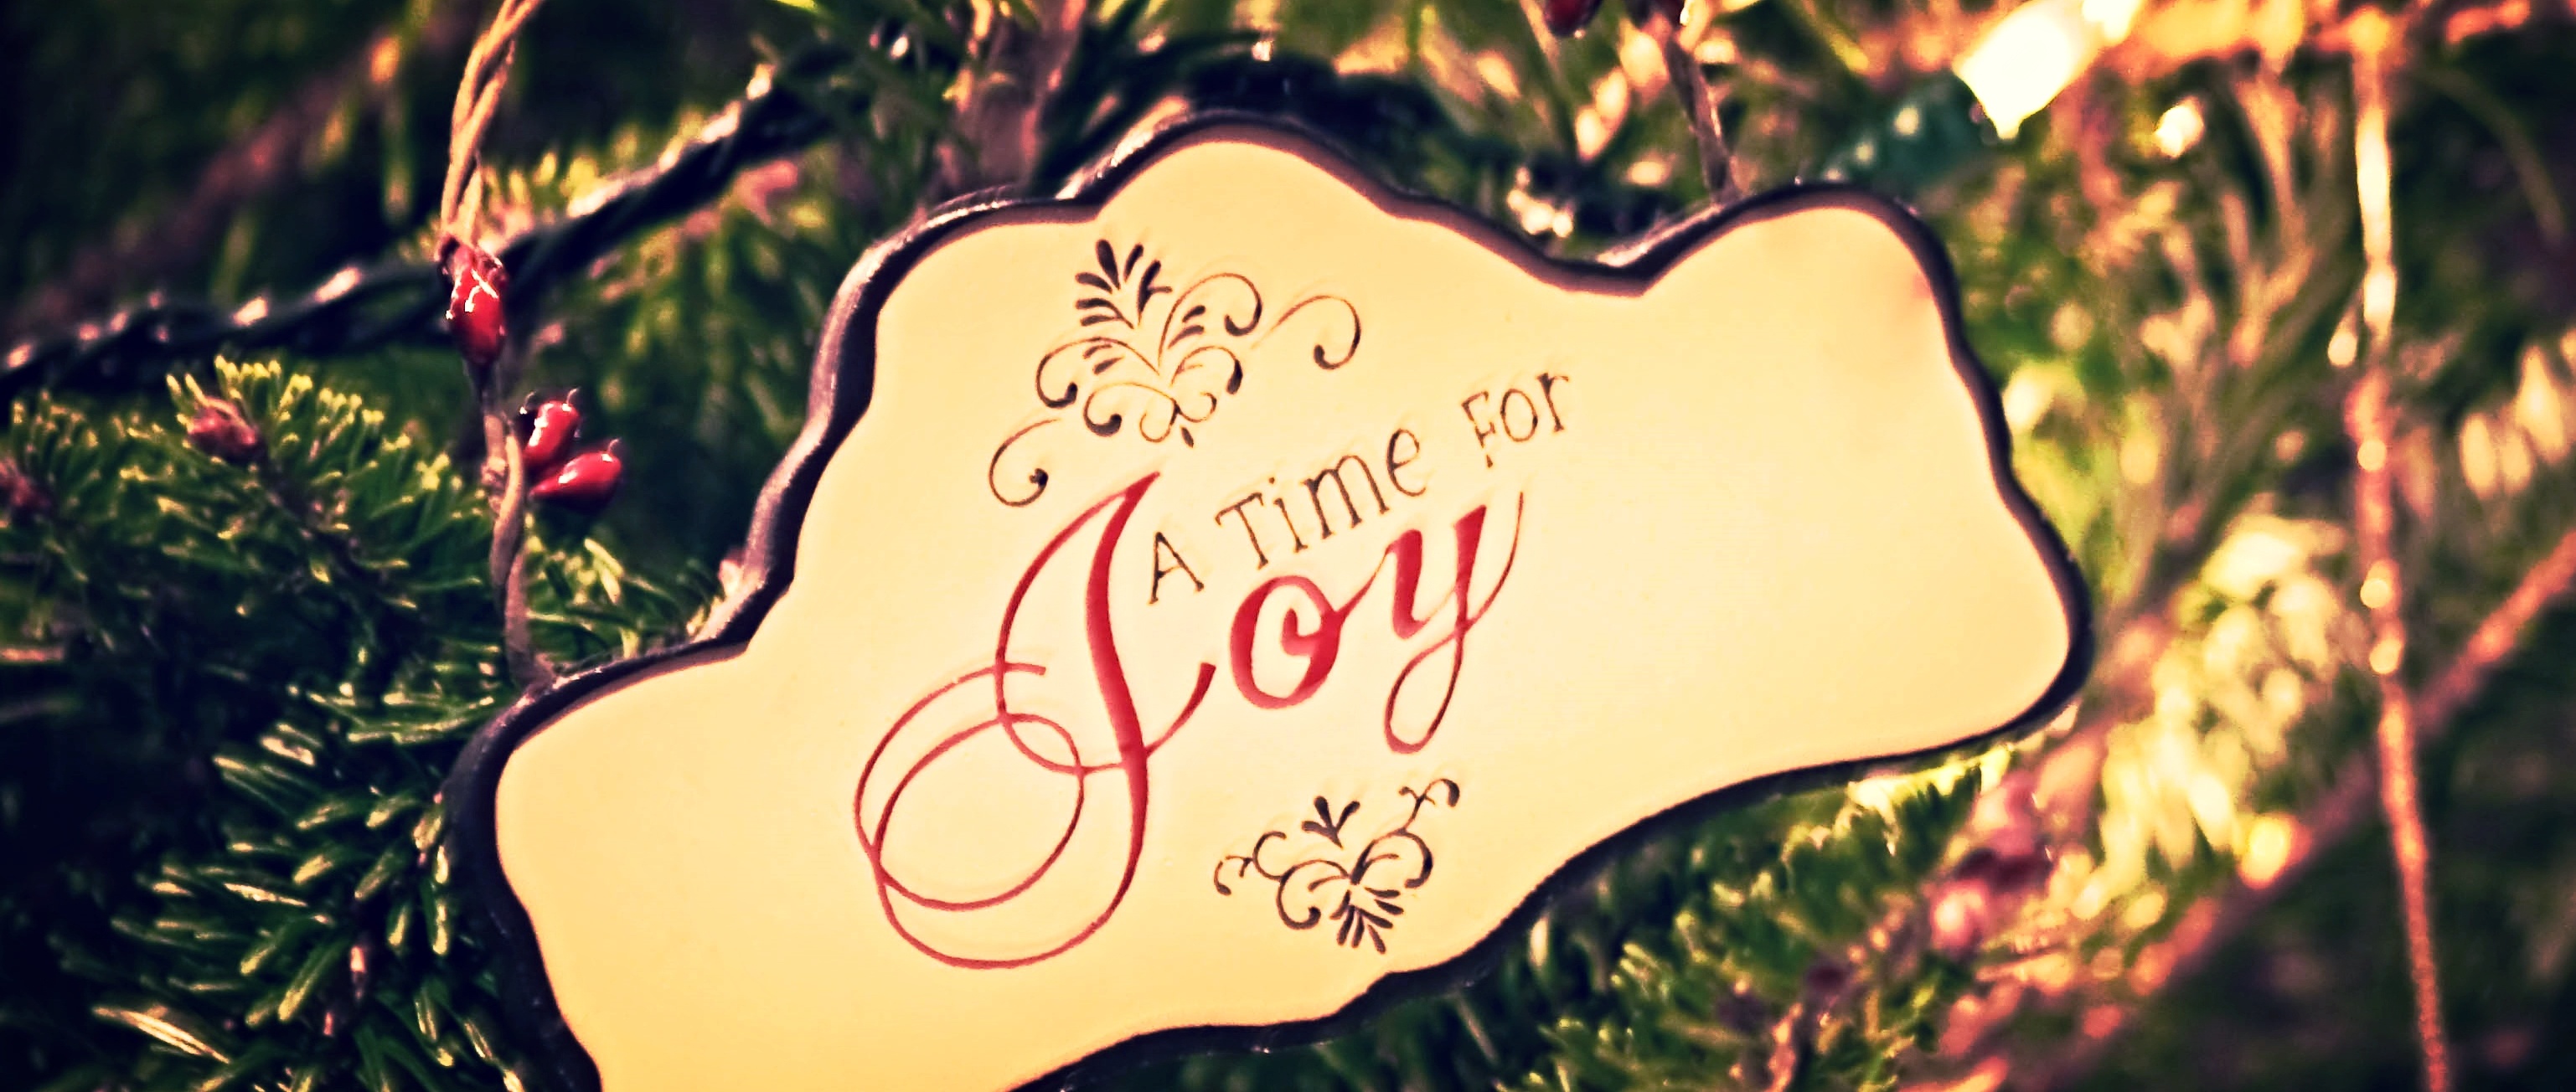 A Christmas ornament that says "The Season for Joy"